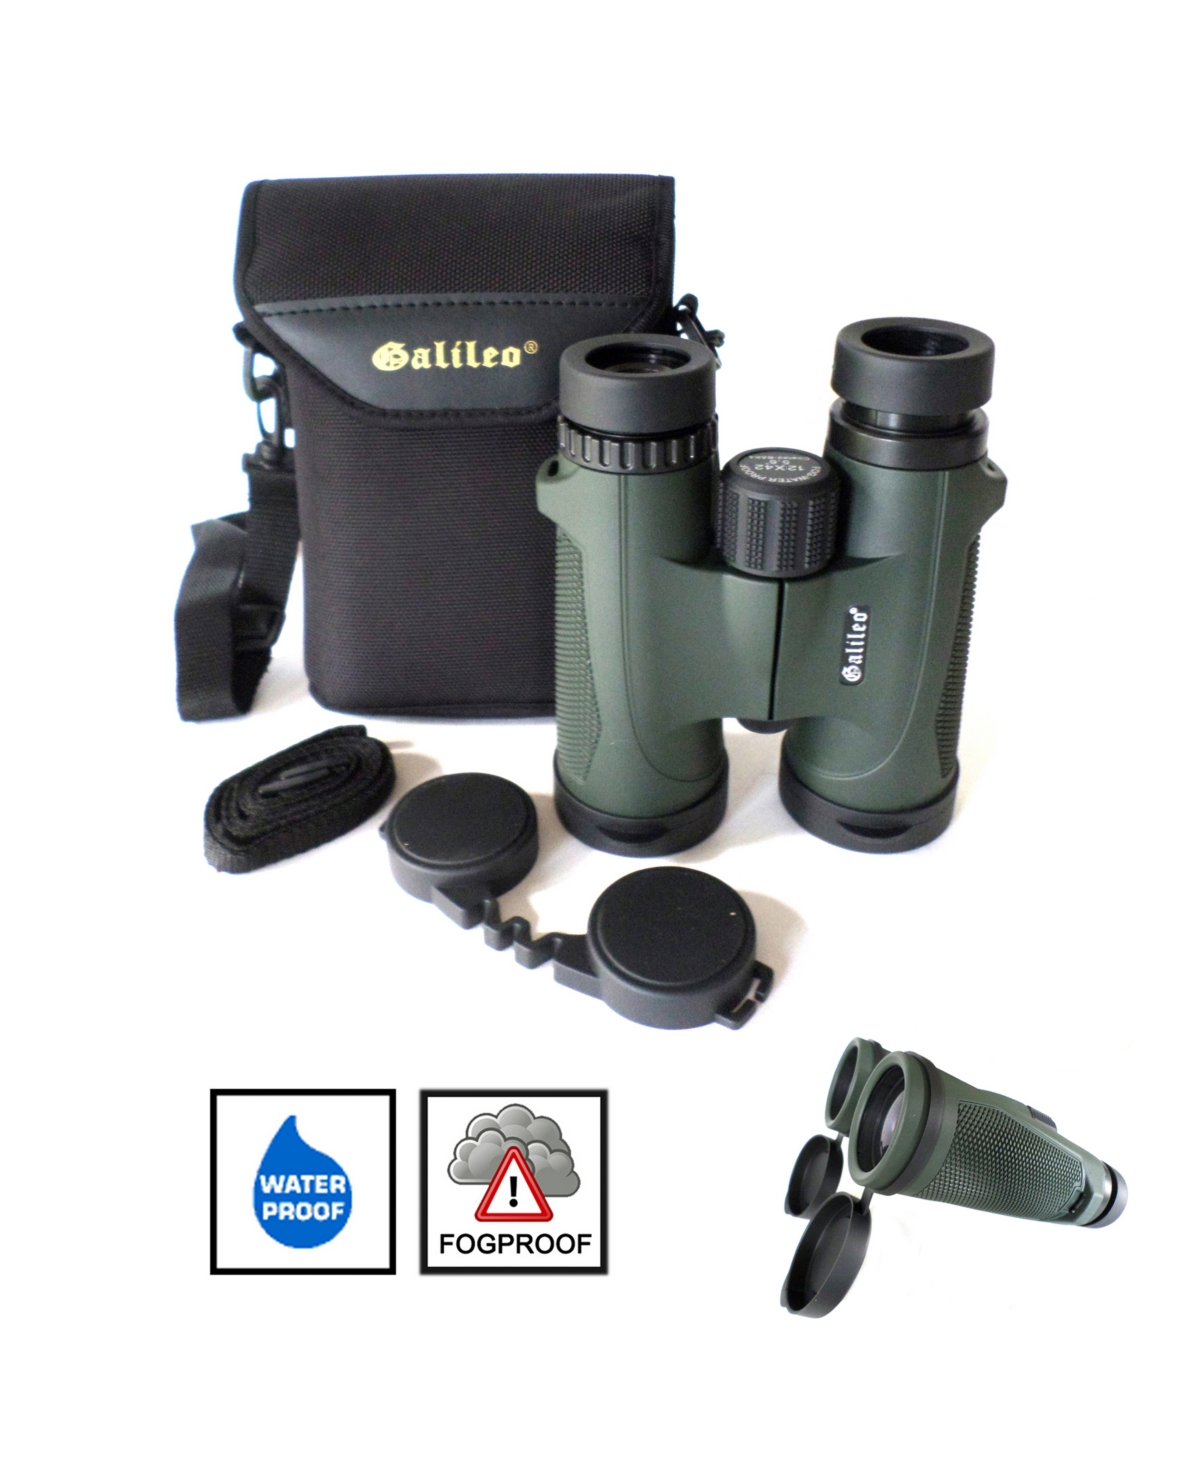 Cosmo Brands Galileo 12 Power Nitrogen Purged Fog And Waterproof Binoculars + 42mm Bak4 Prisms In Olive